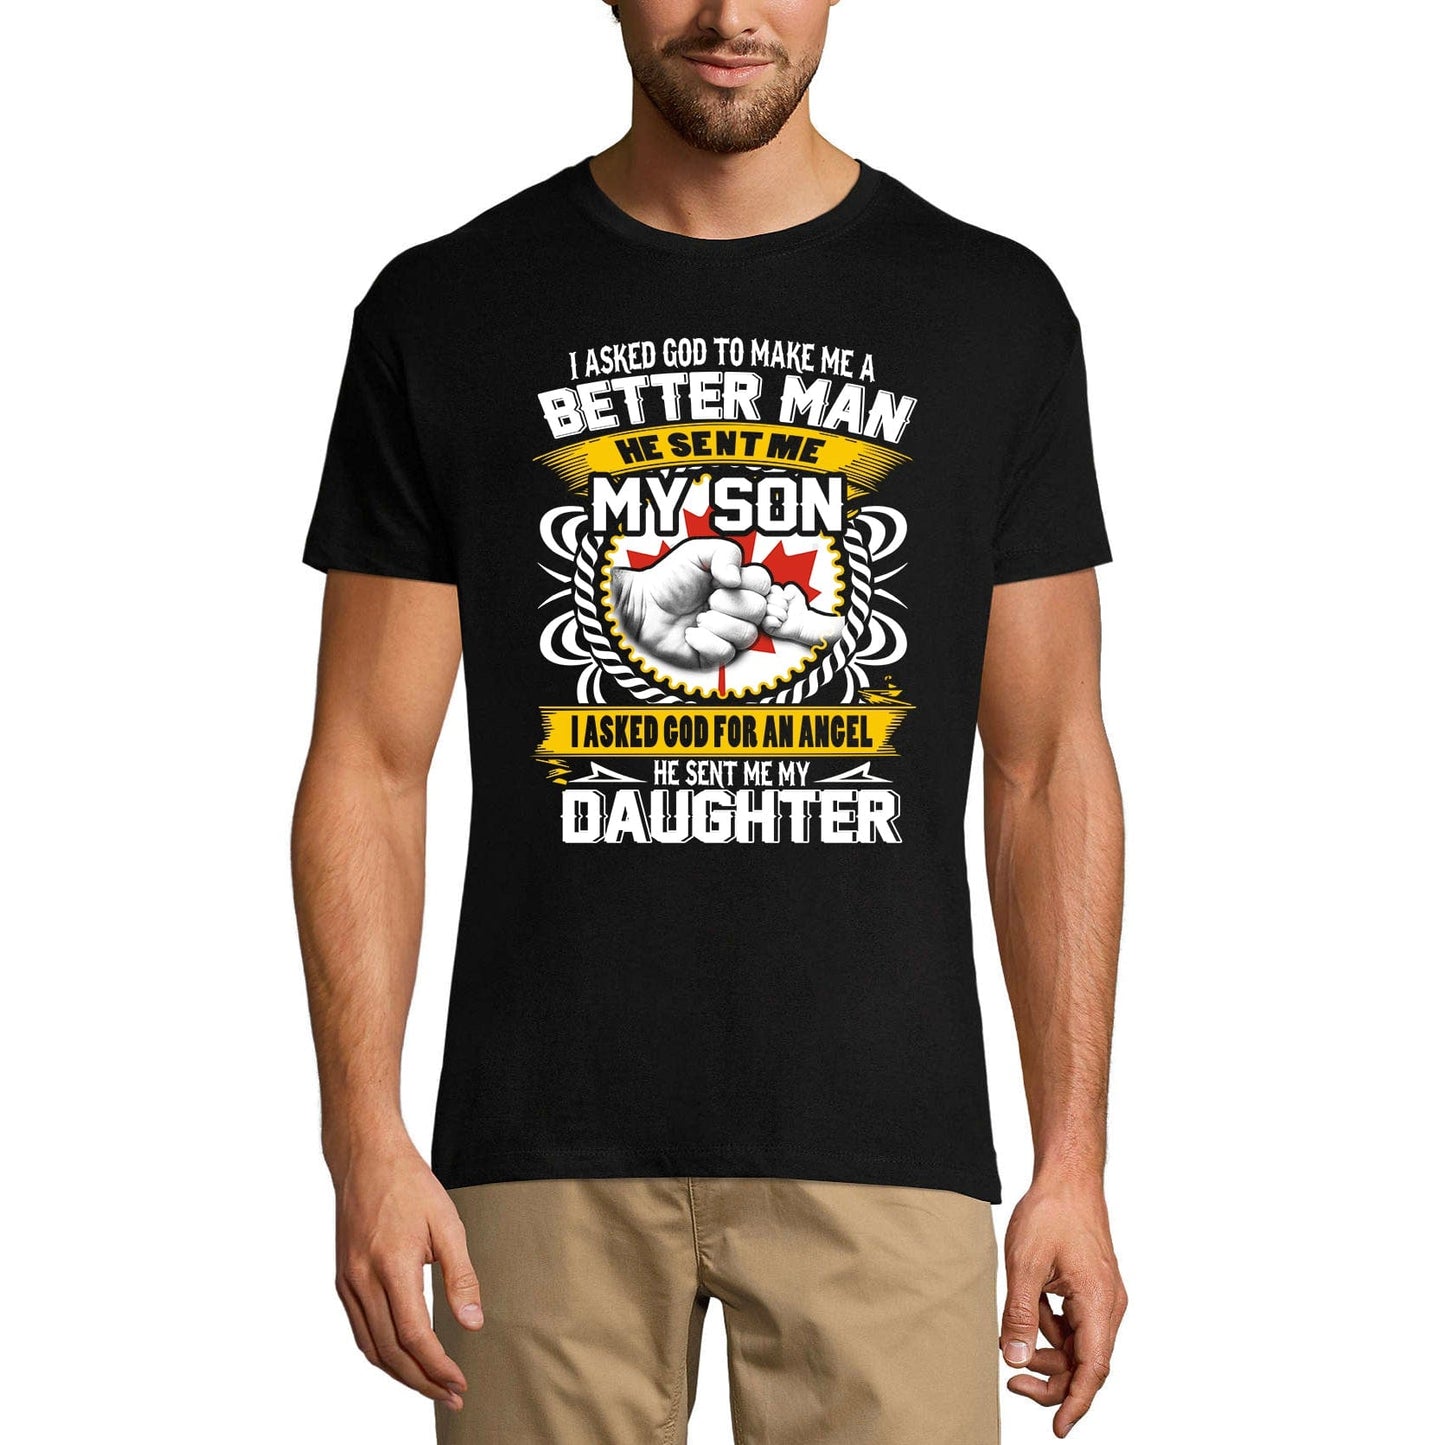 ULTRABASIC Men's Novelty T-Shirt God Sent Me Son and Daughter Tee Shirt